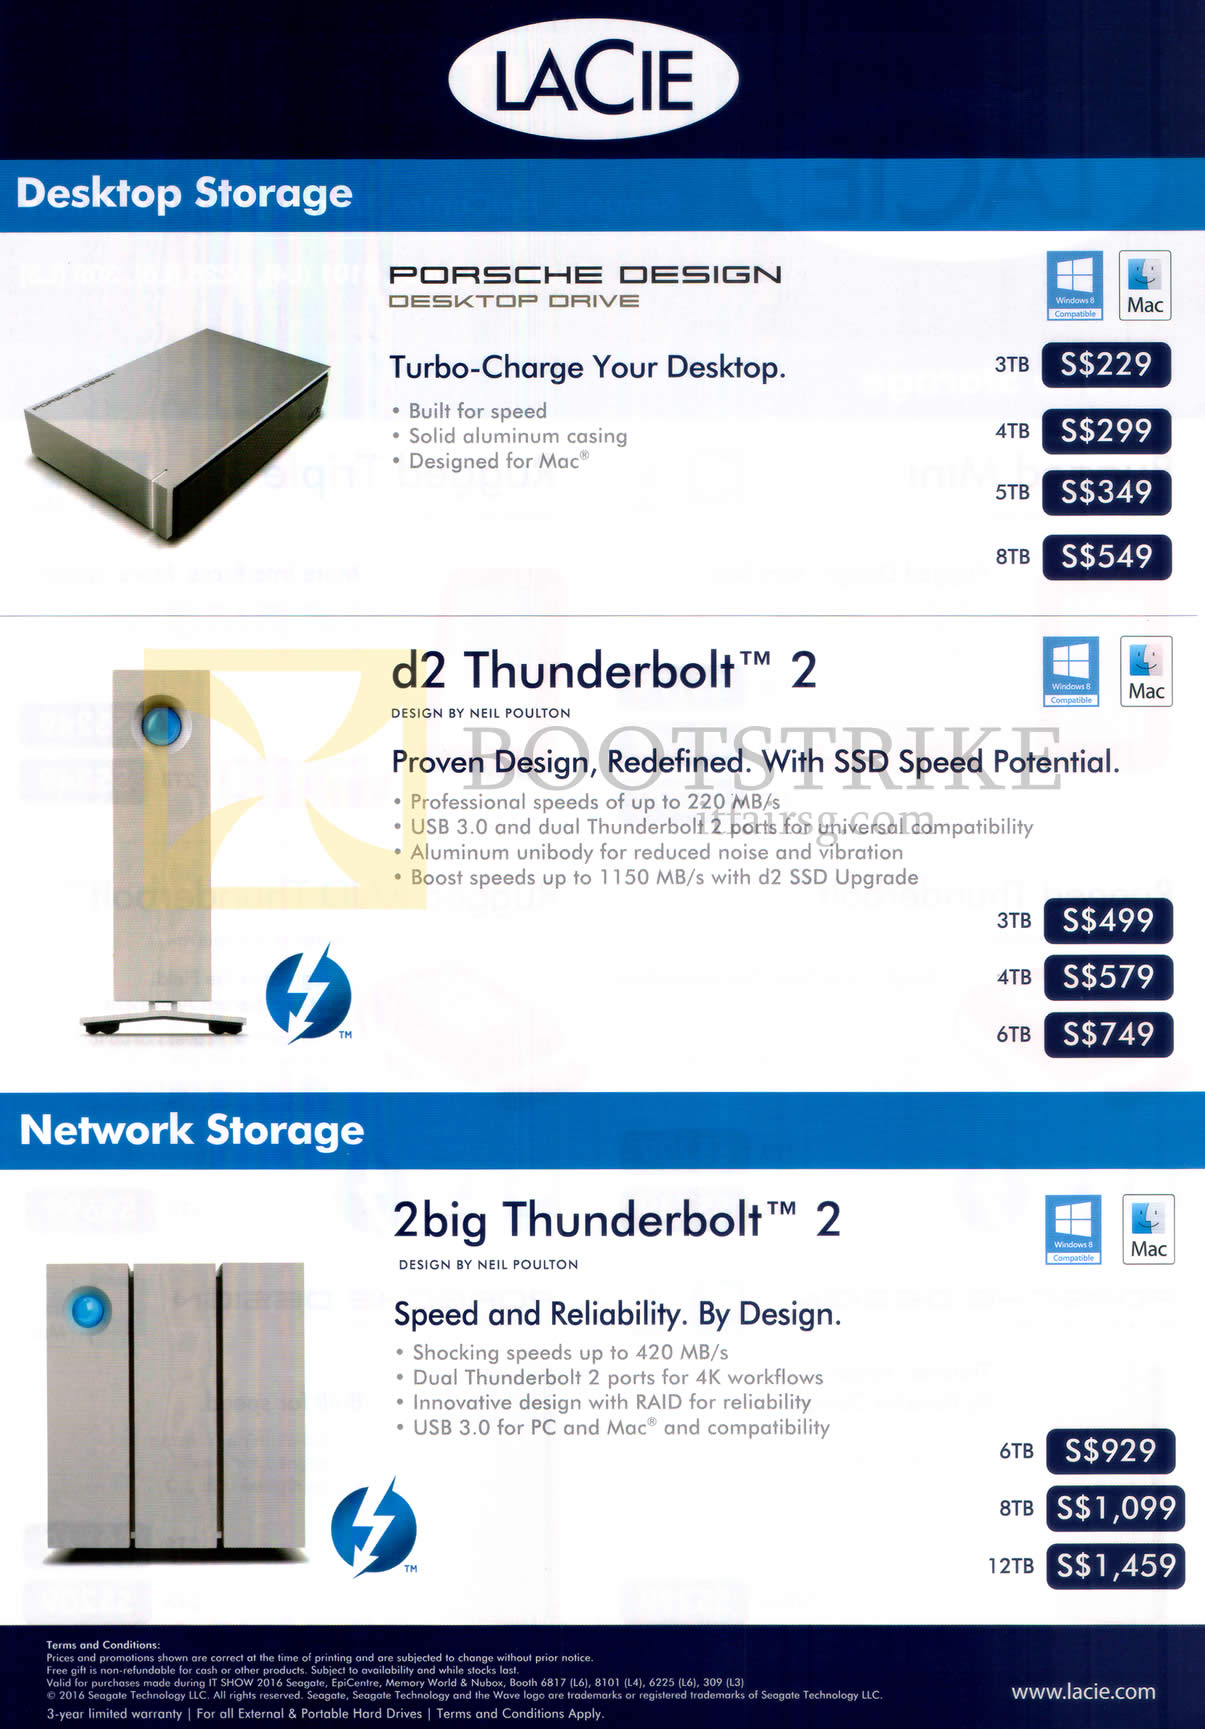 IT SHOW 2016 price list image brochure of Lacie Desktop Drive Porsche Design, D2 Thunderbolt 2, 2big Thunderbolt 2 NAS